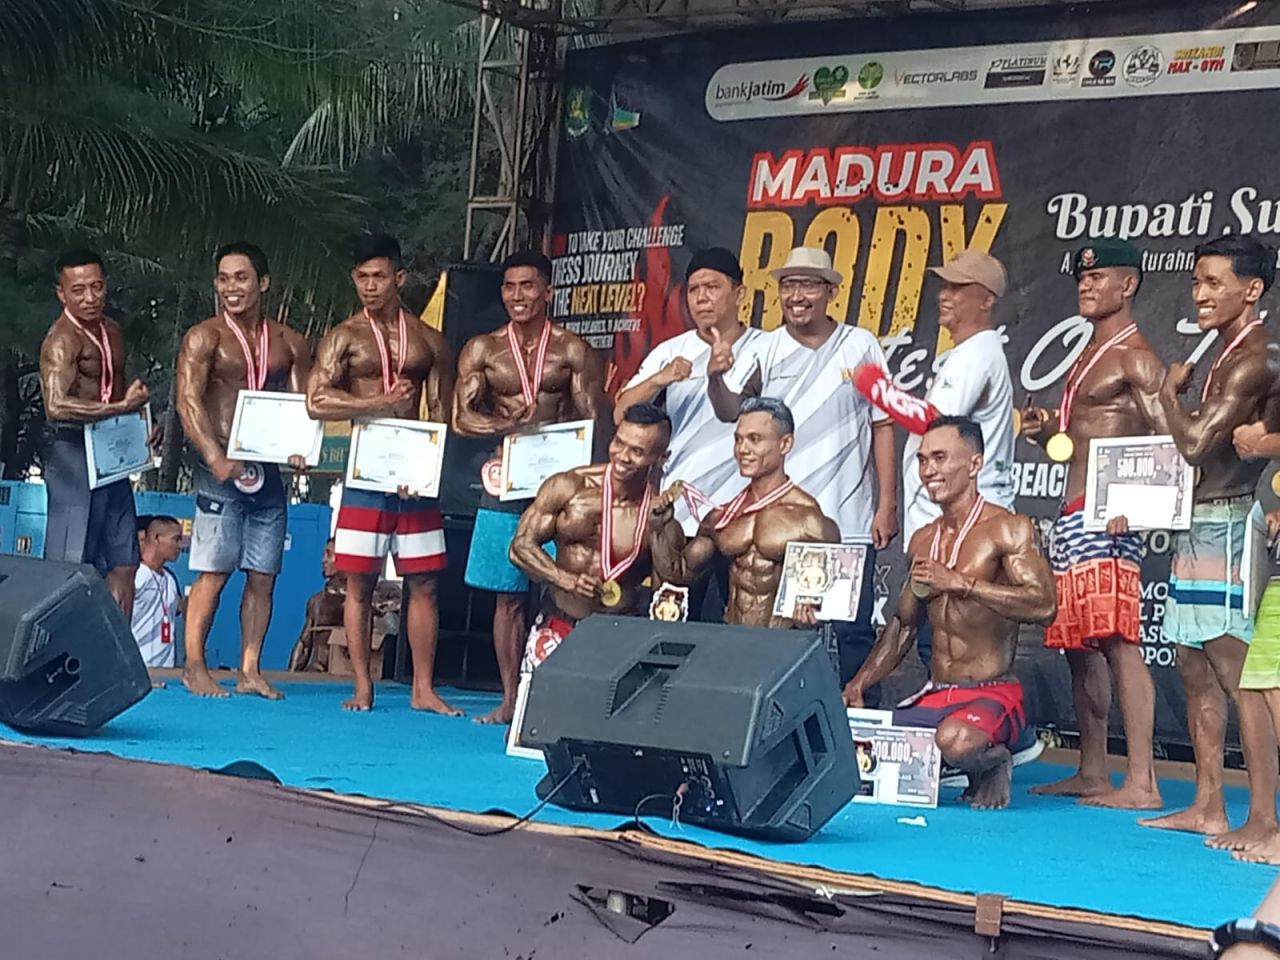 Madura Body Contest Upaya Penggerak Sektor Pariwisata di Sumenep